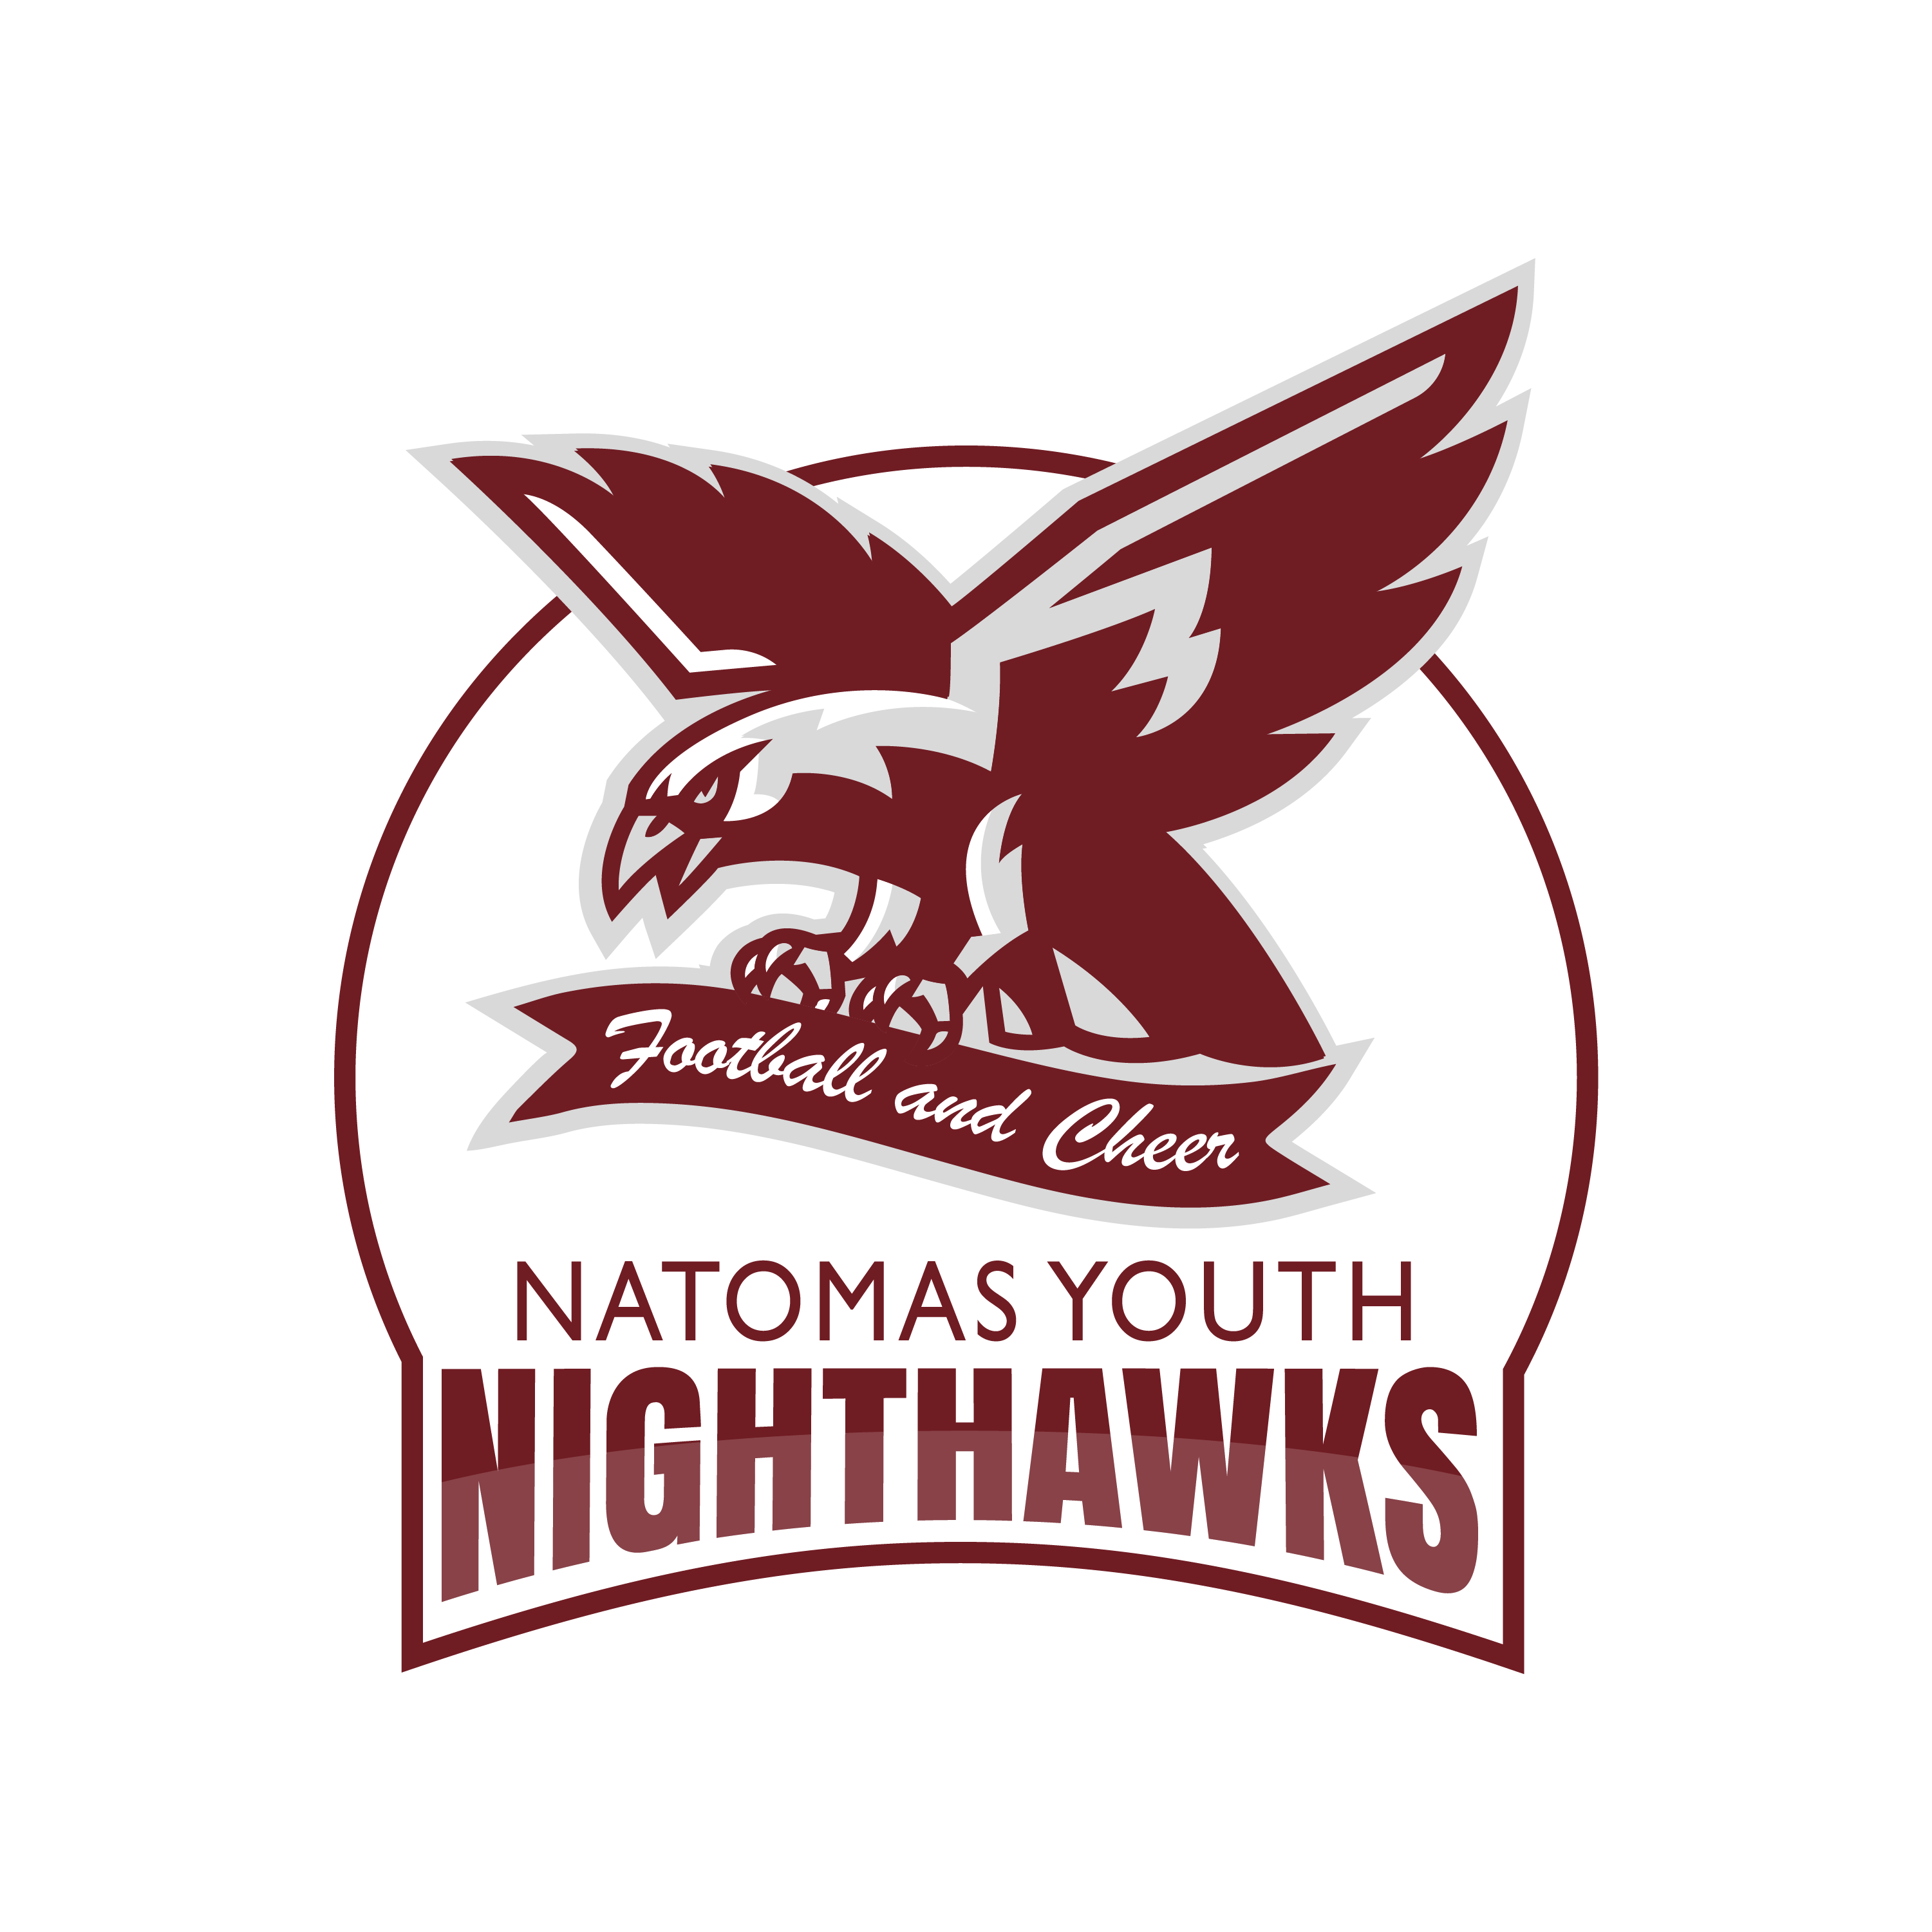 Logo - Natomas Nighthawks Football And Cheer Logo Red and White